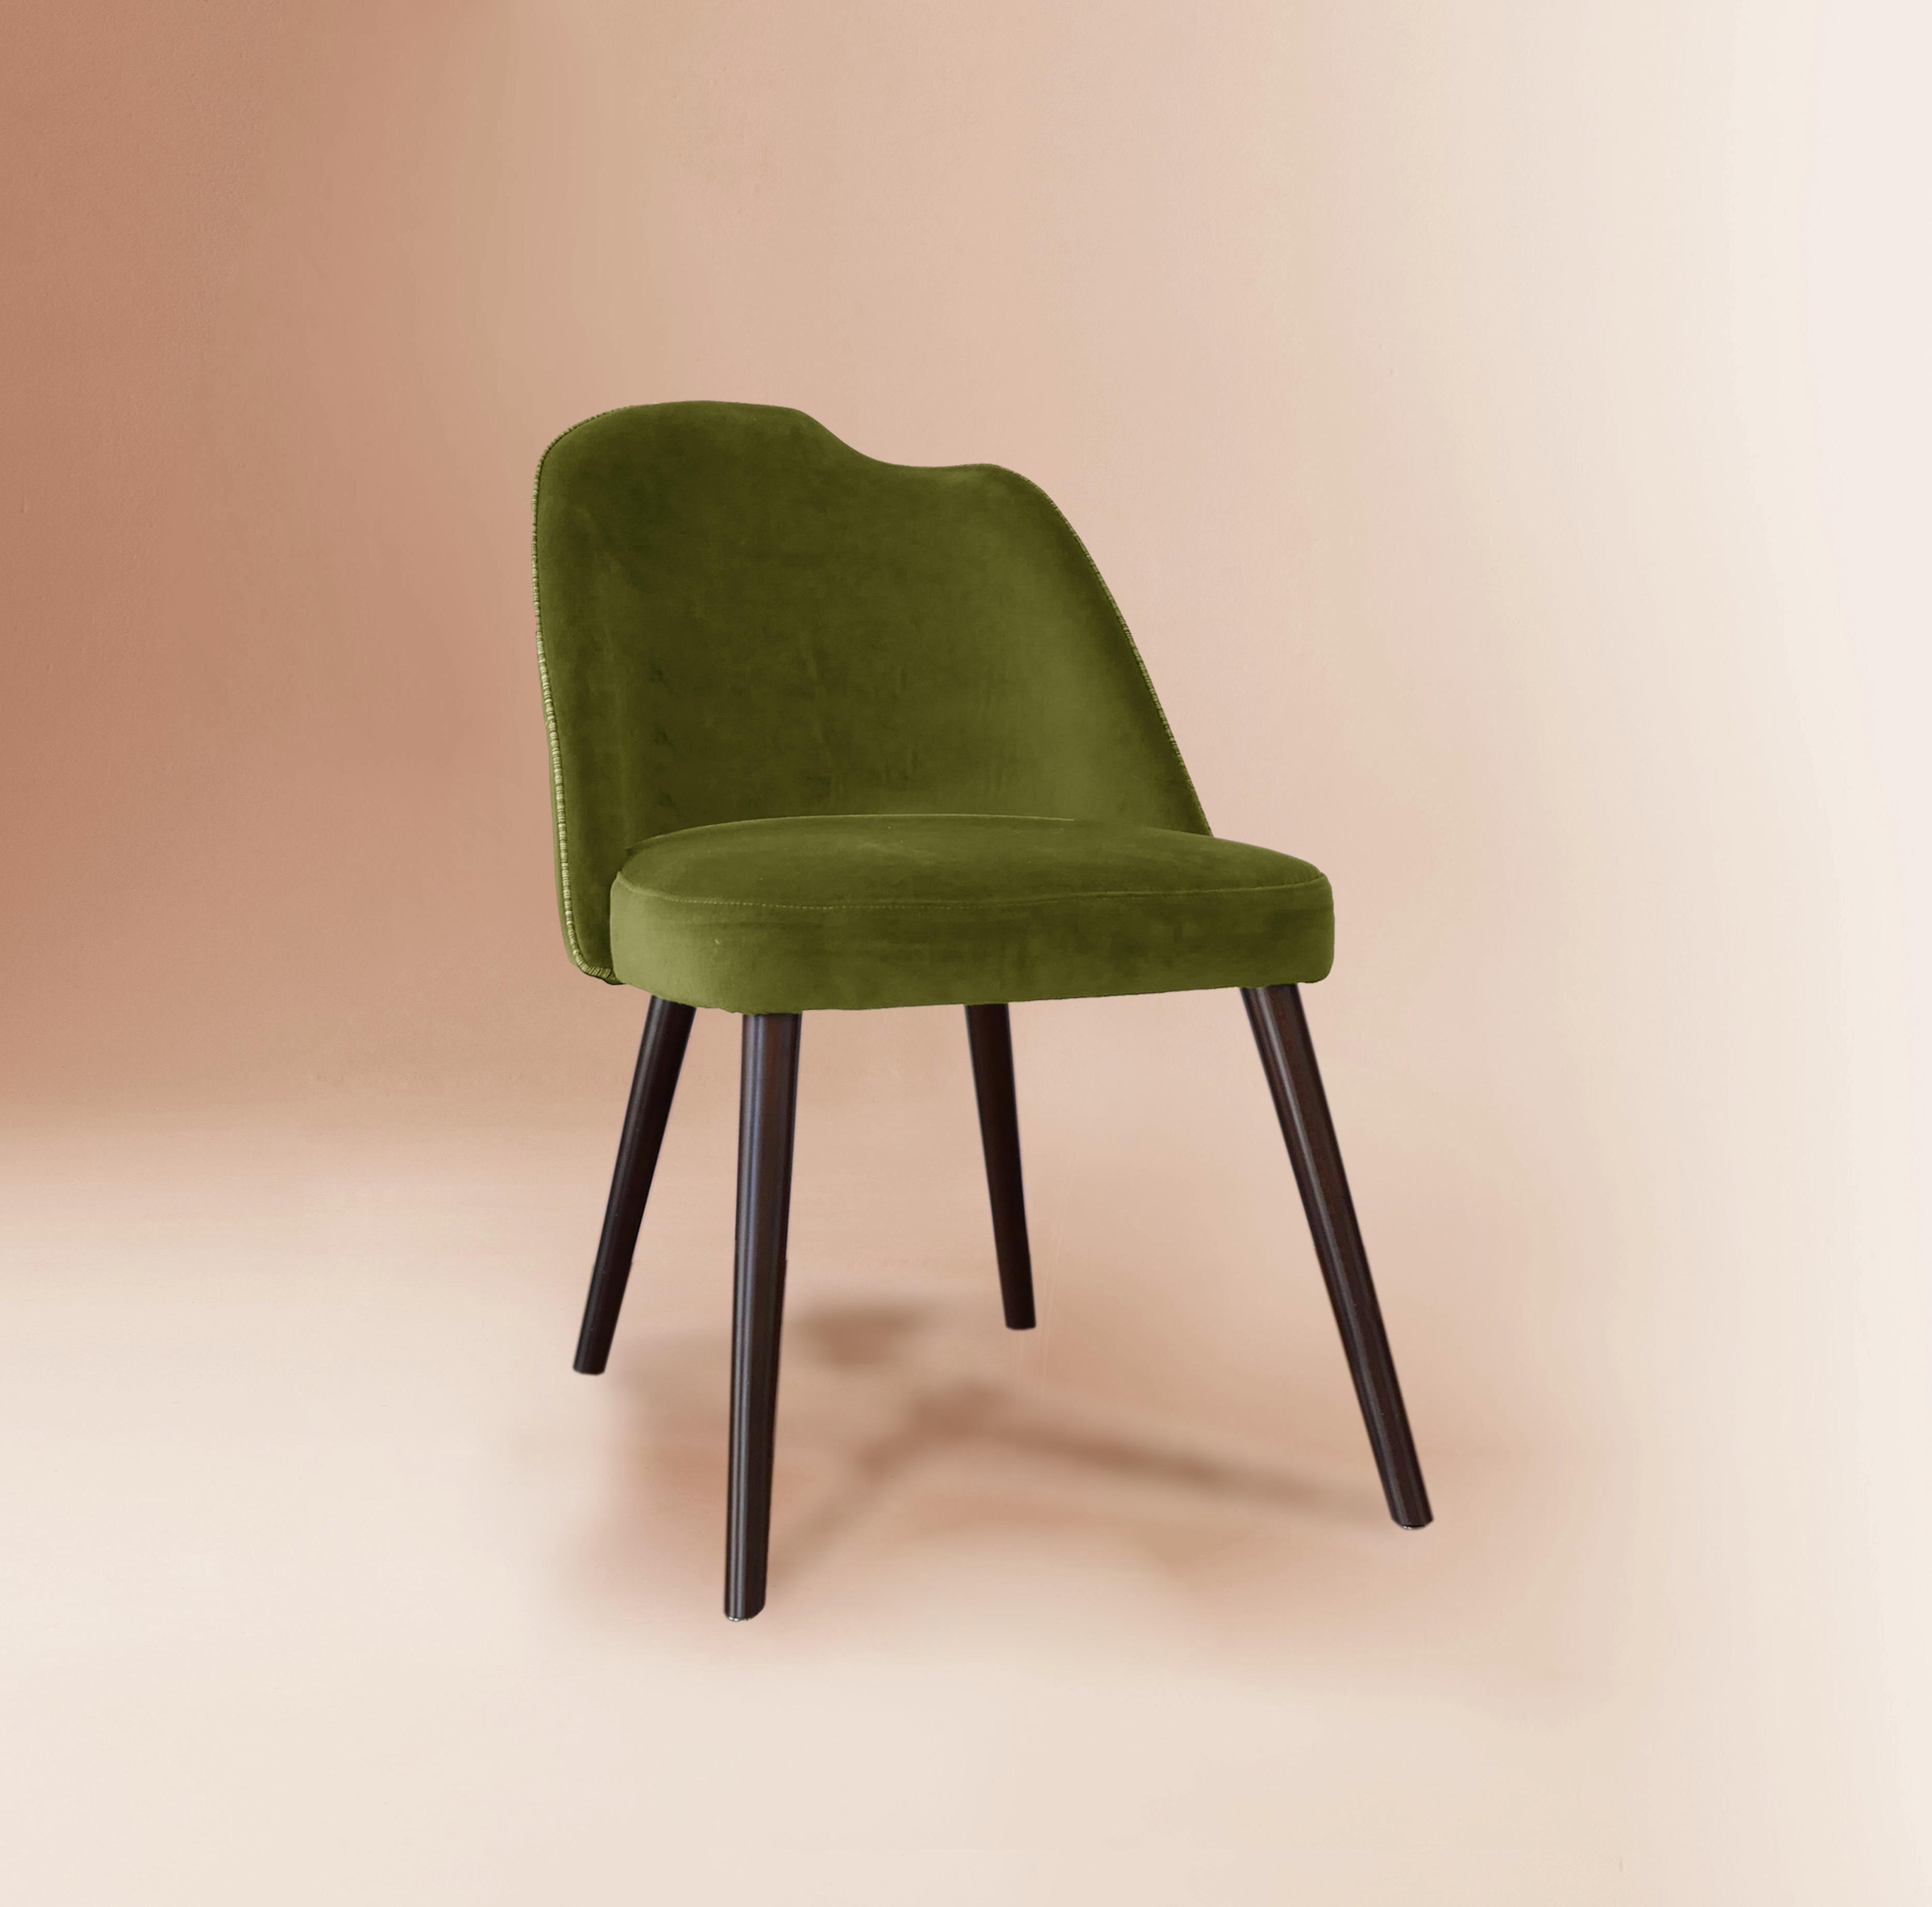 Green Yves chair by Dovain Studio
Dimensions: H 85 x W 54 x D 54 x SH 49 cm.
Materials: velvet, wood.

Dovain Studio
Creative direction by Sergio Prieto, a Spanish artist-designer who was born in Talavera de la Reina in 1994. He dedicated